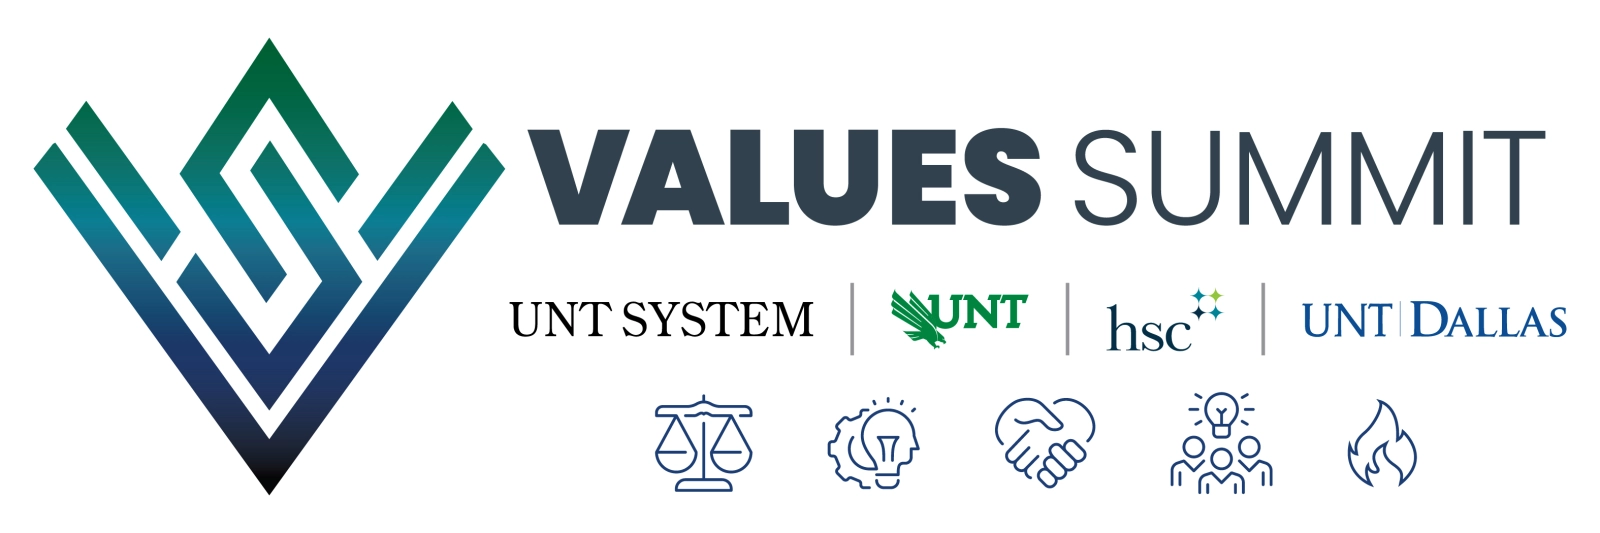 Values Summit logo